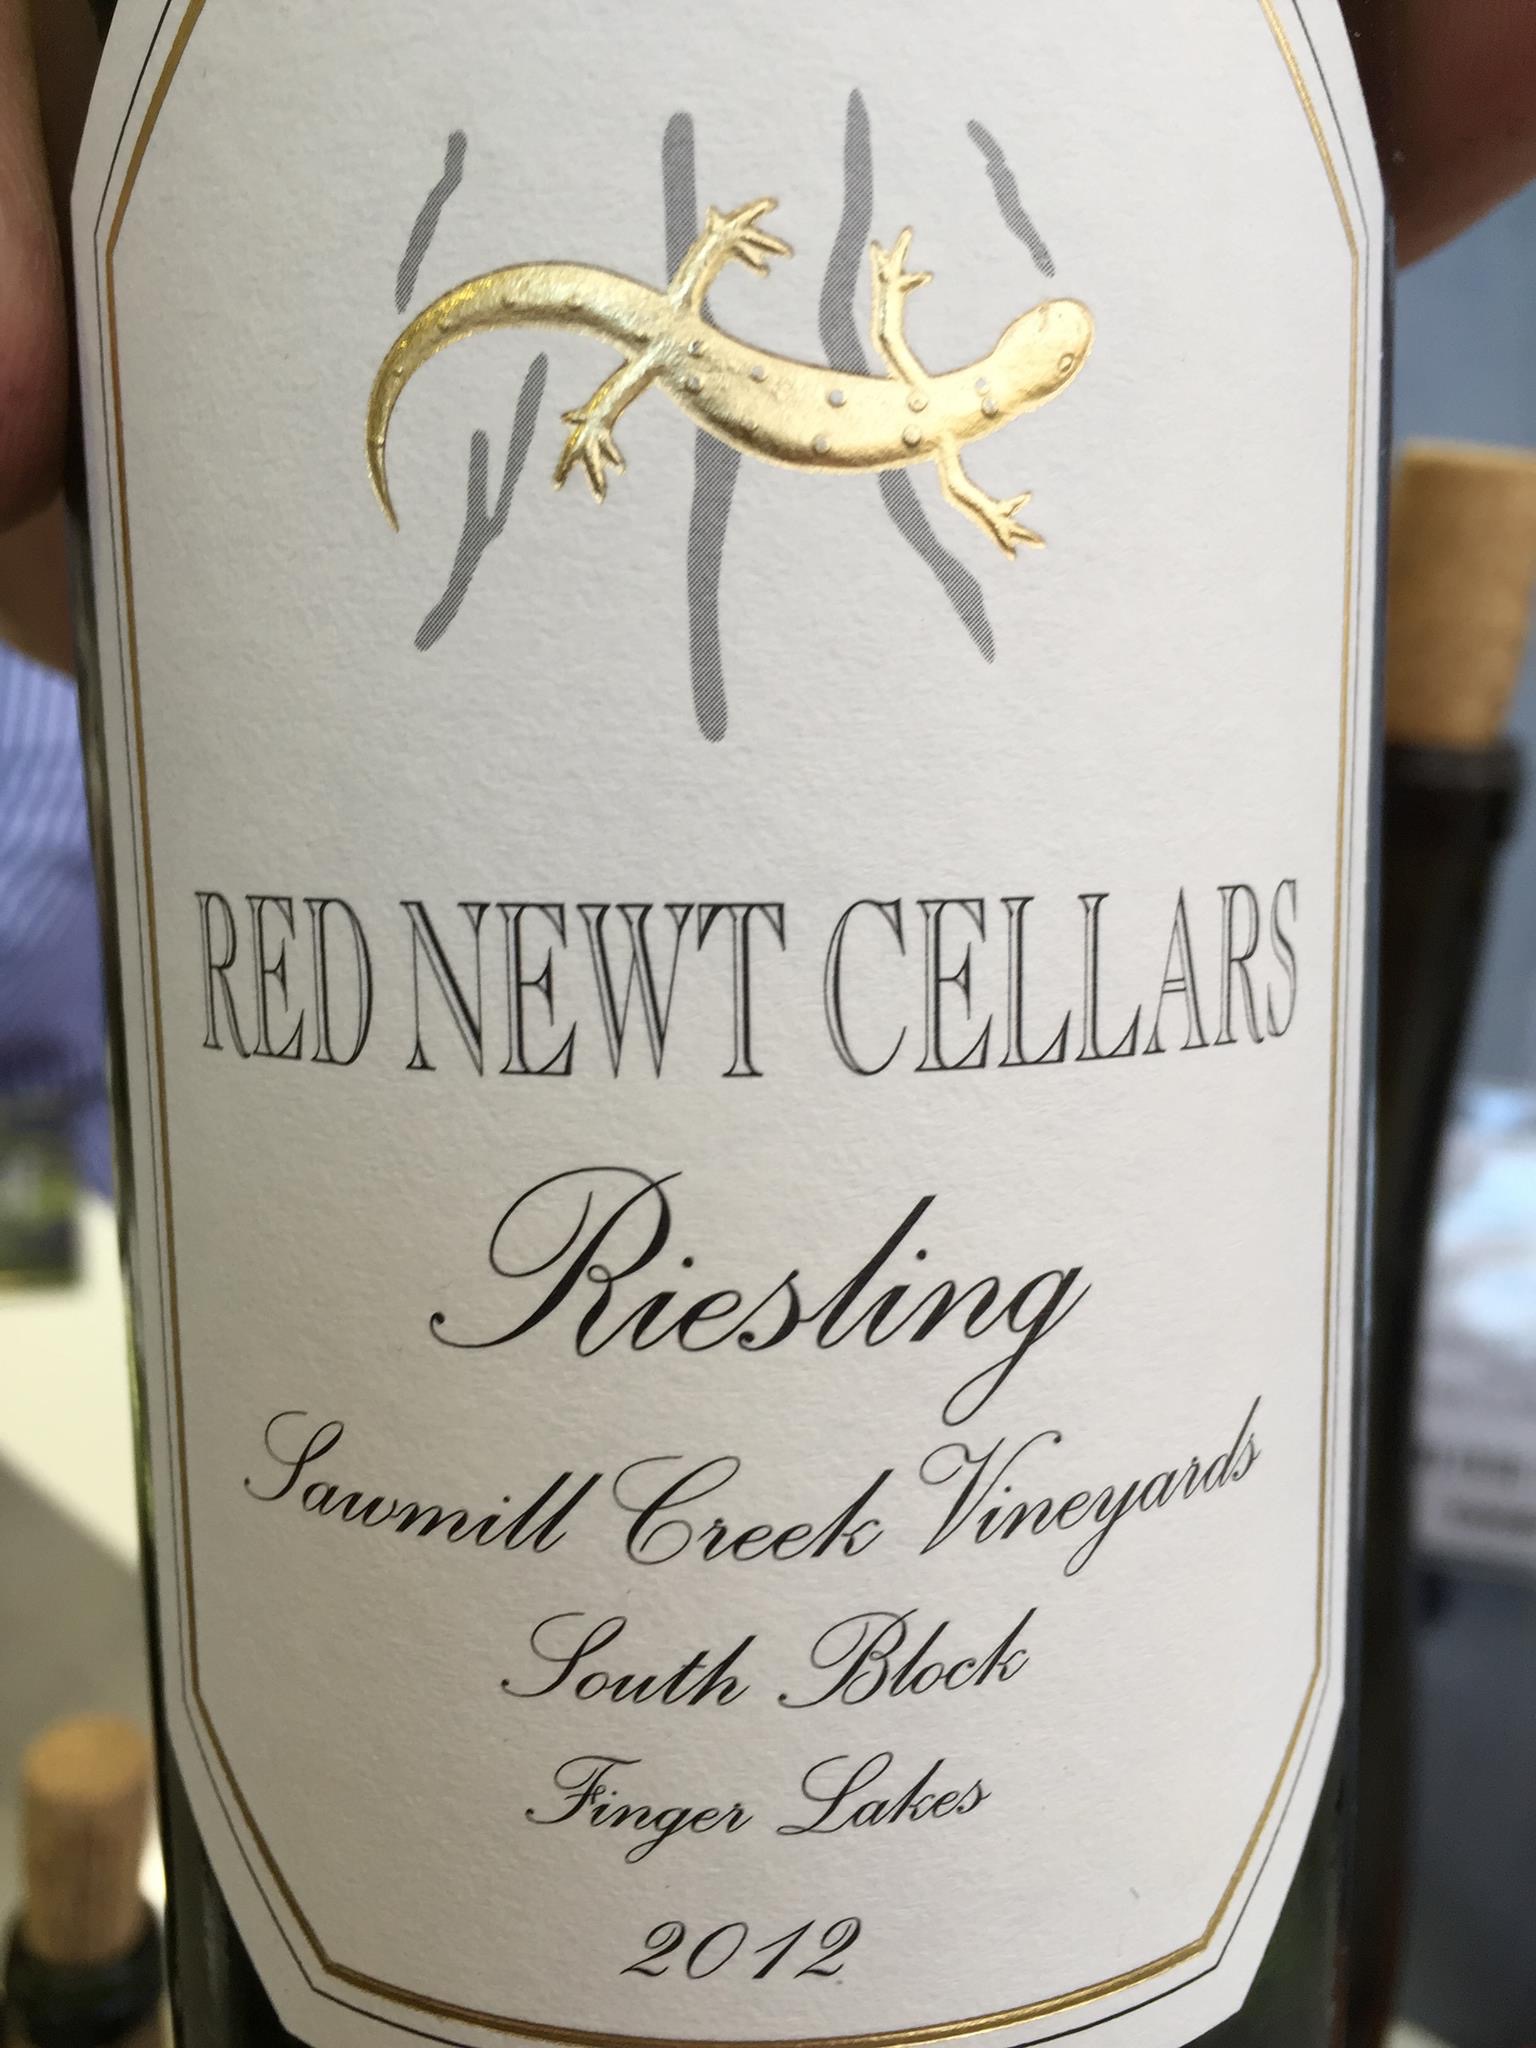 Red Newt Cellars – Riesling 2012 – Sawmill Creek Vineyards – South Block – Finger Lakes